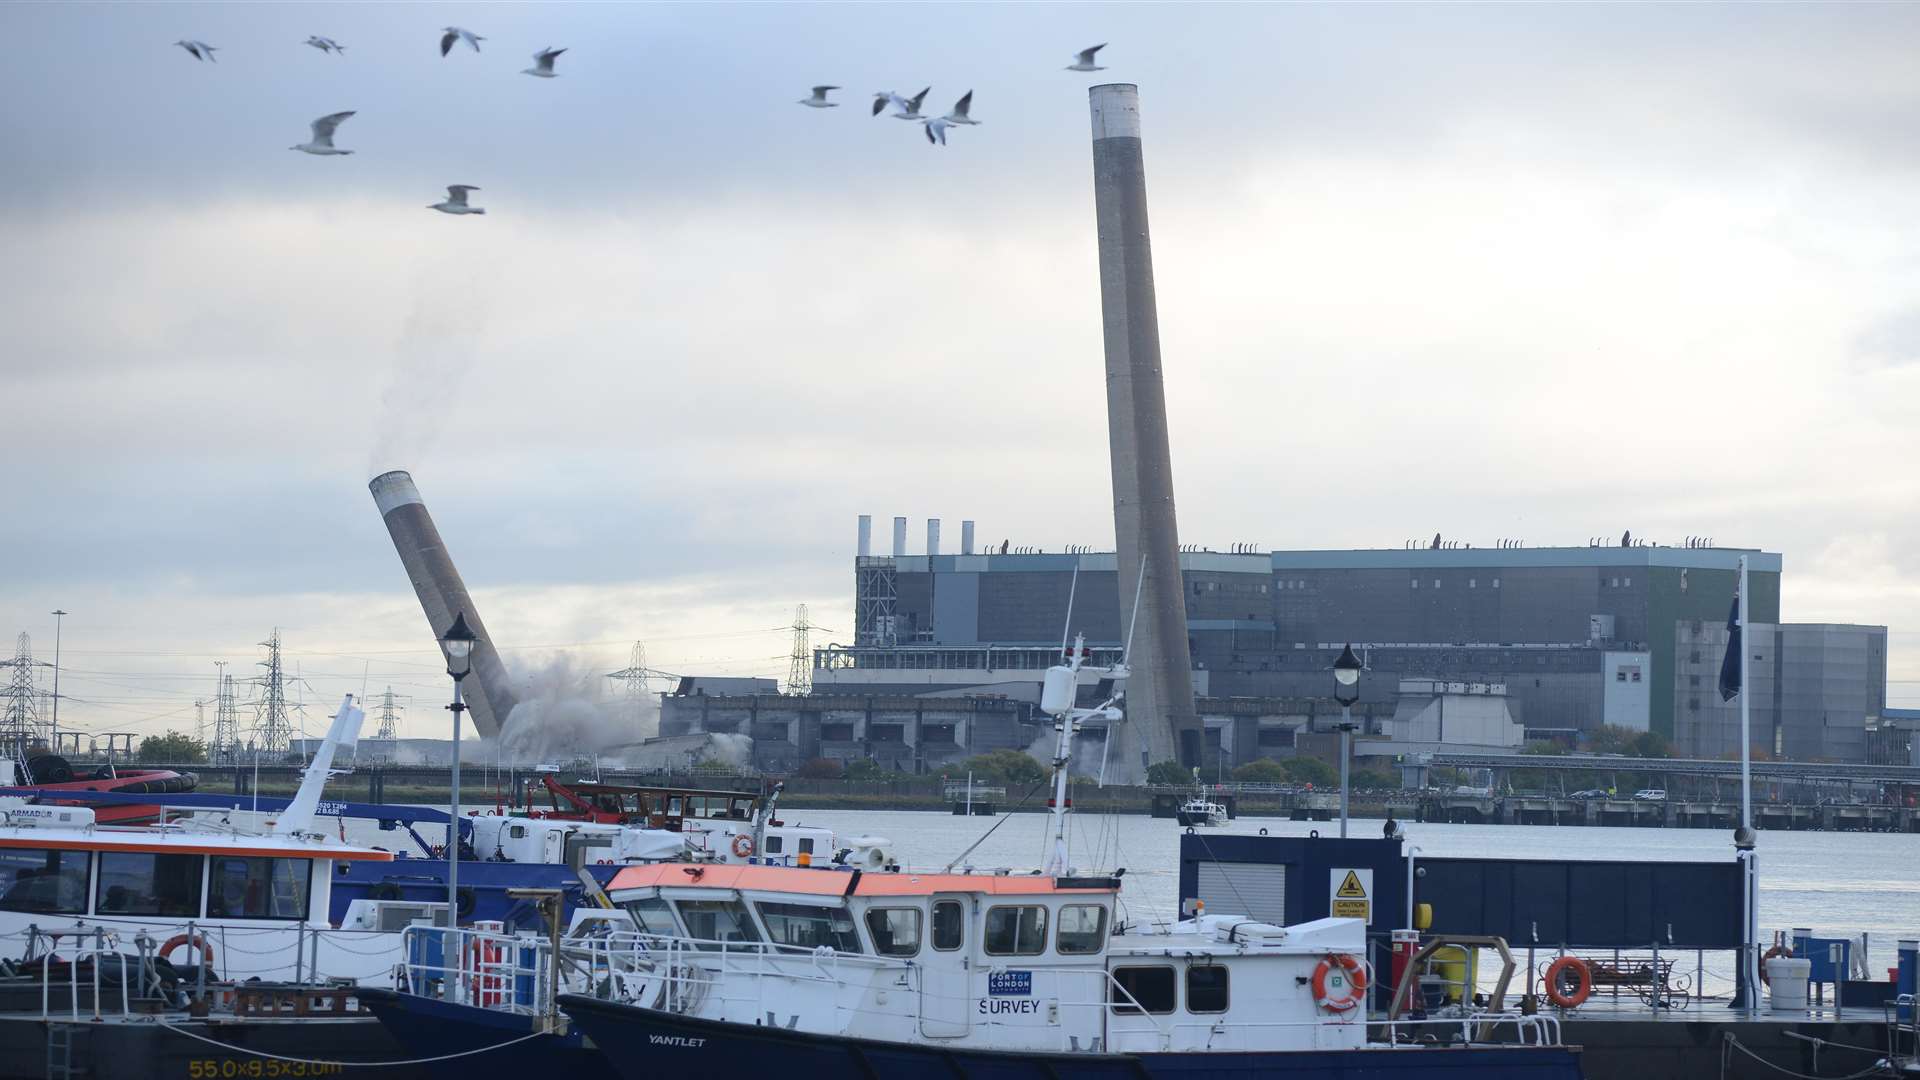 The chimneys fall at Tilbury Power Station in September